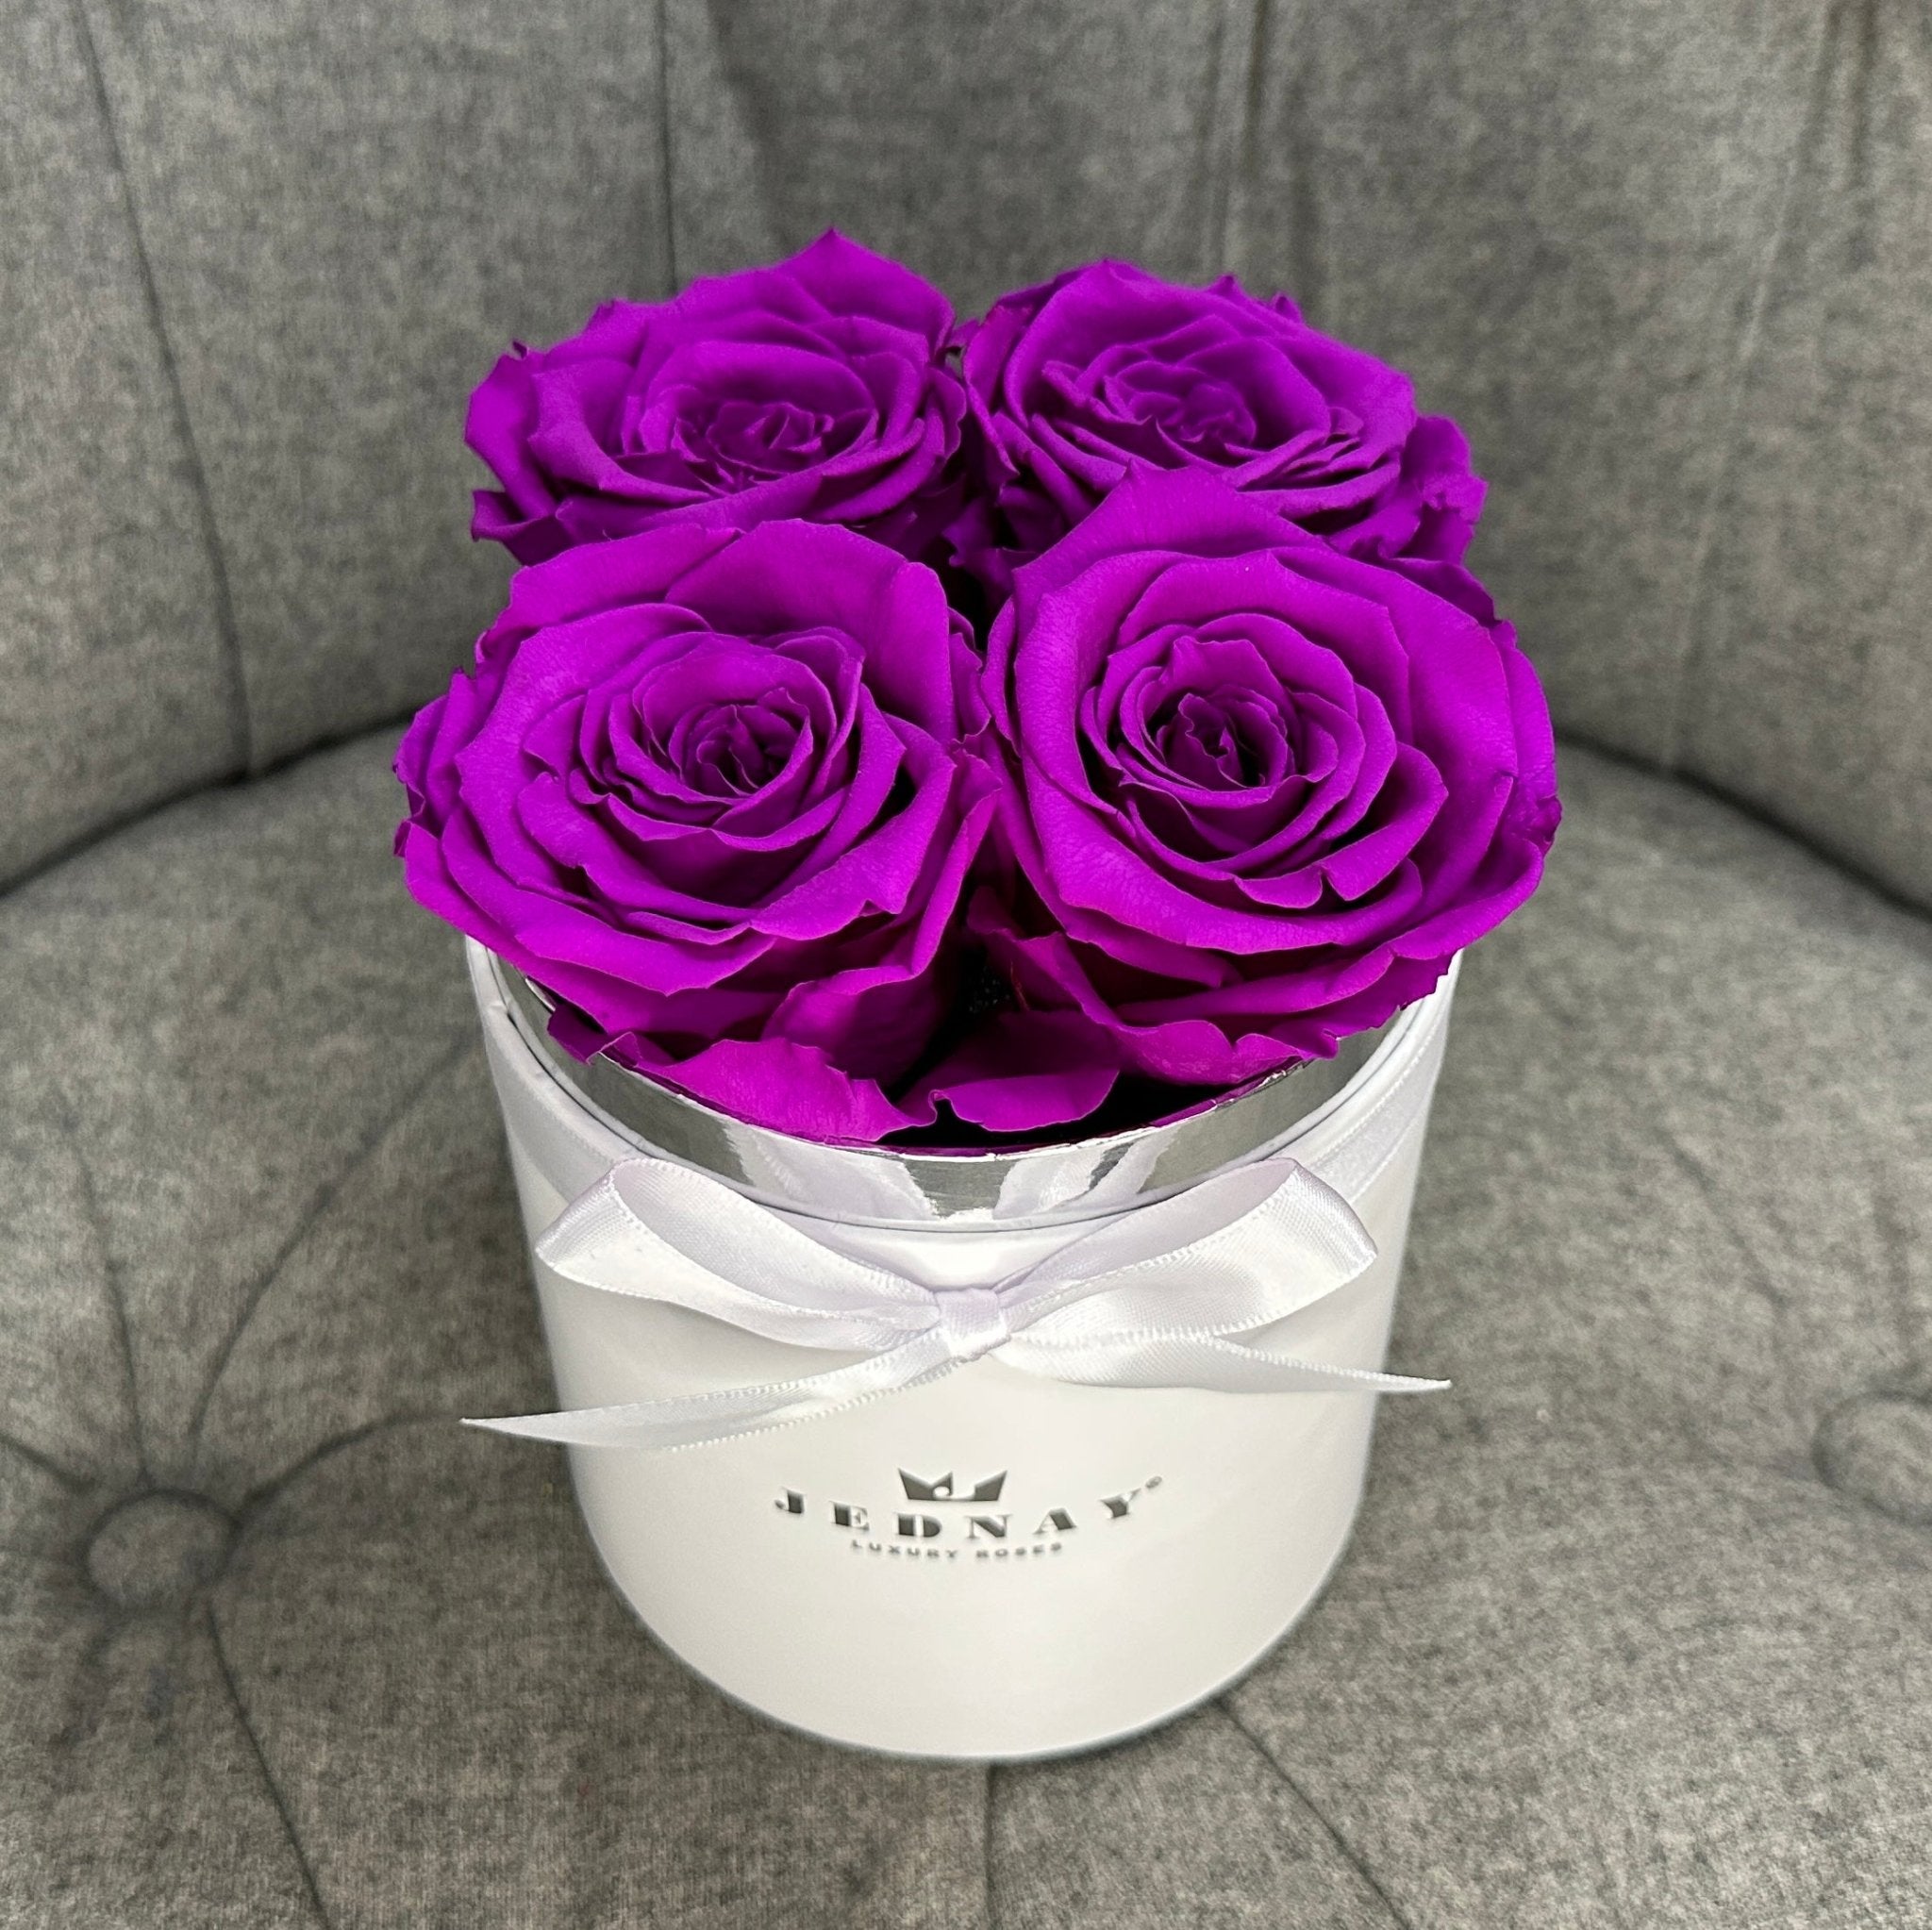 Petite Classic White Forever Rose Box - Purple Rain Eternal Roses - Jednay Roses